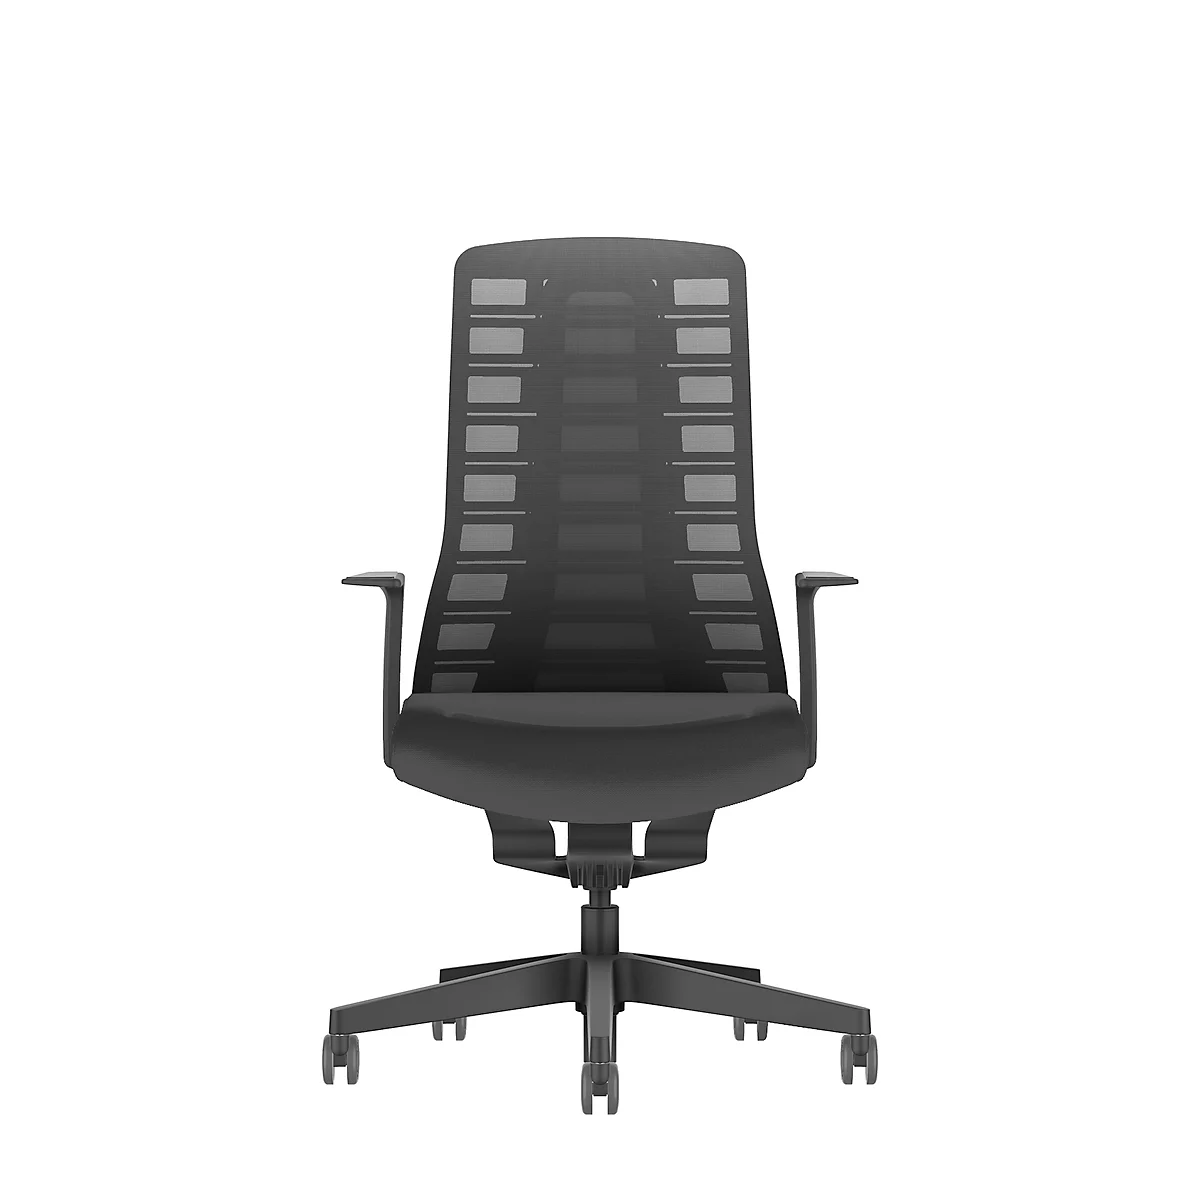 Interstuhl bureaustoel PUREis3, vaste armleuningen, 3D auto-synchroonmechanisme, kuipzitting, gazen rugleuning, zwart/zwart